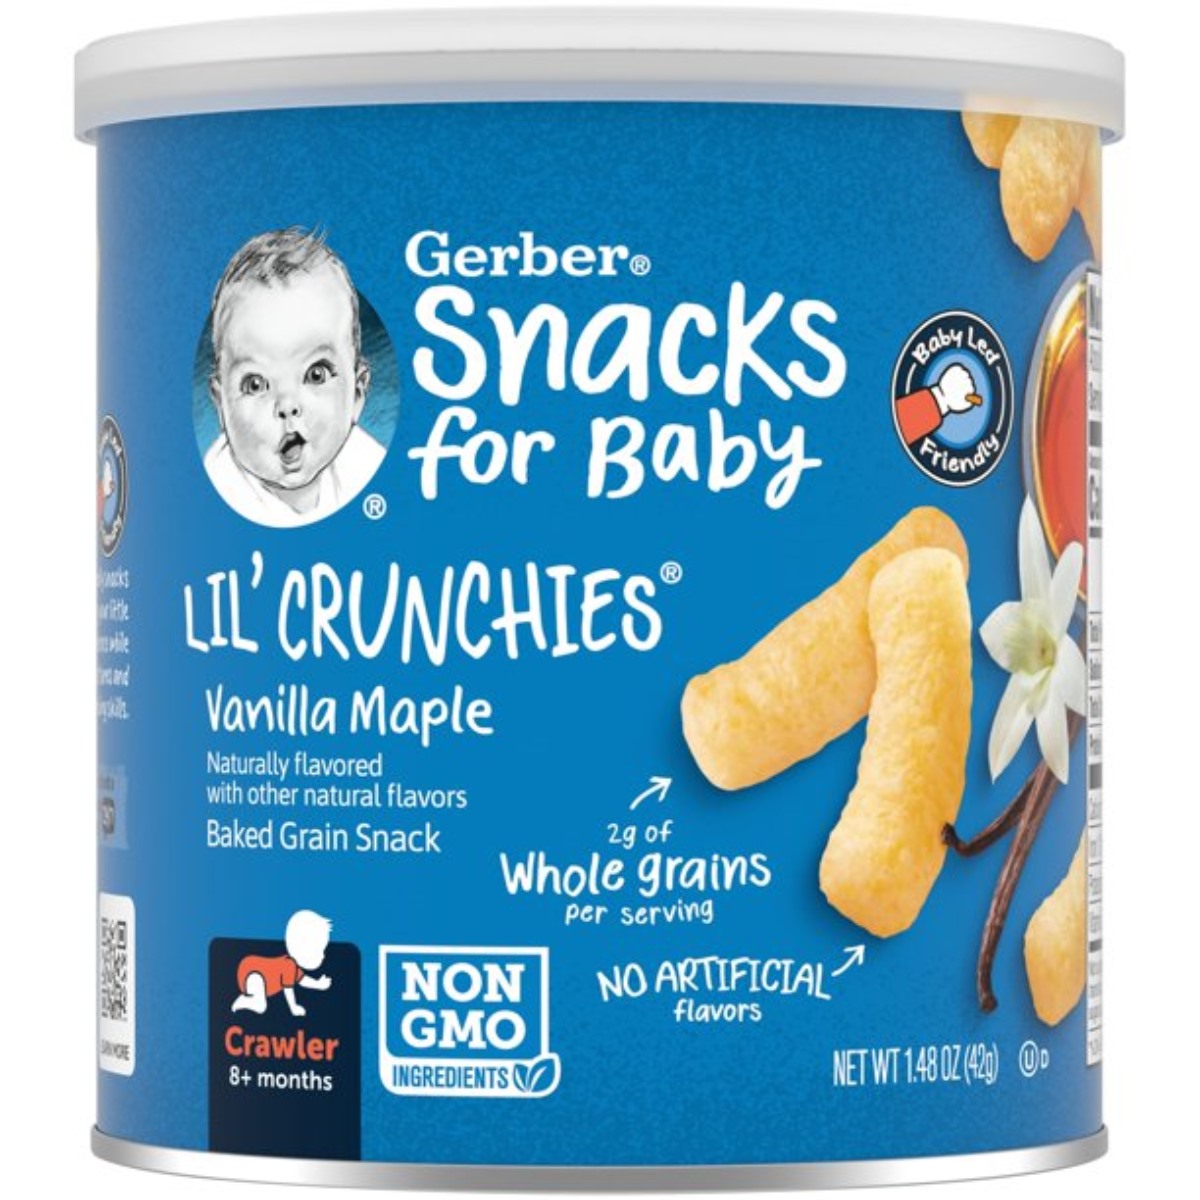 Gerber Snacks for Baby, Lil Crunchies (1.48oz) - Vanilla Maple